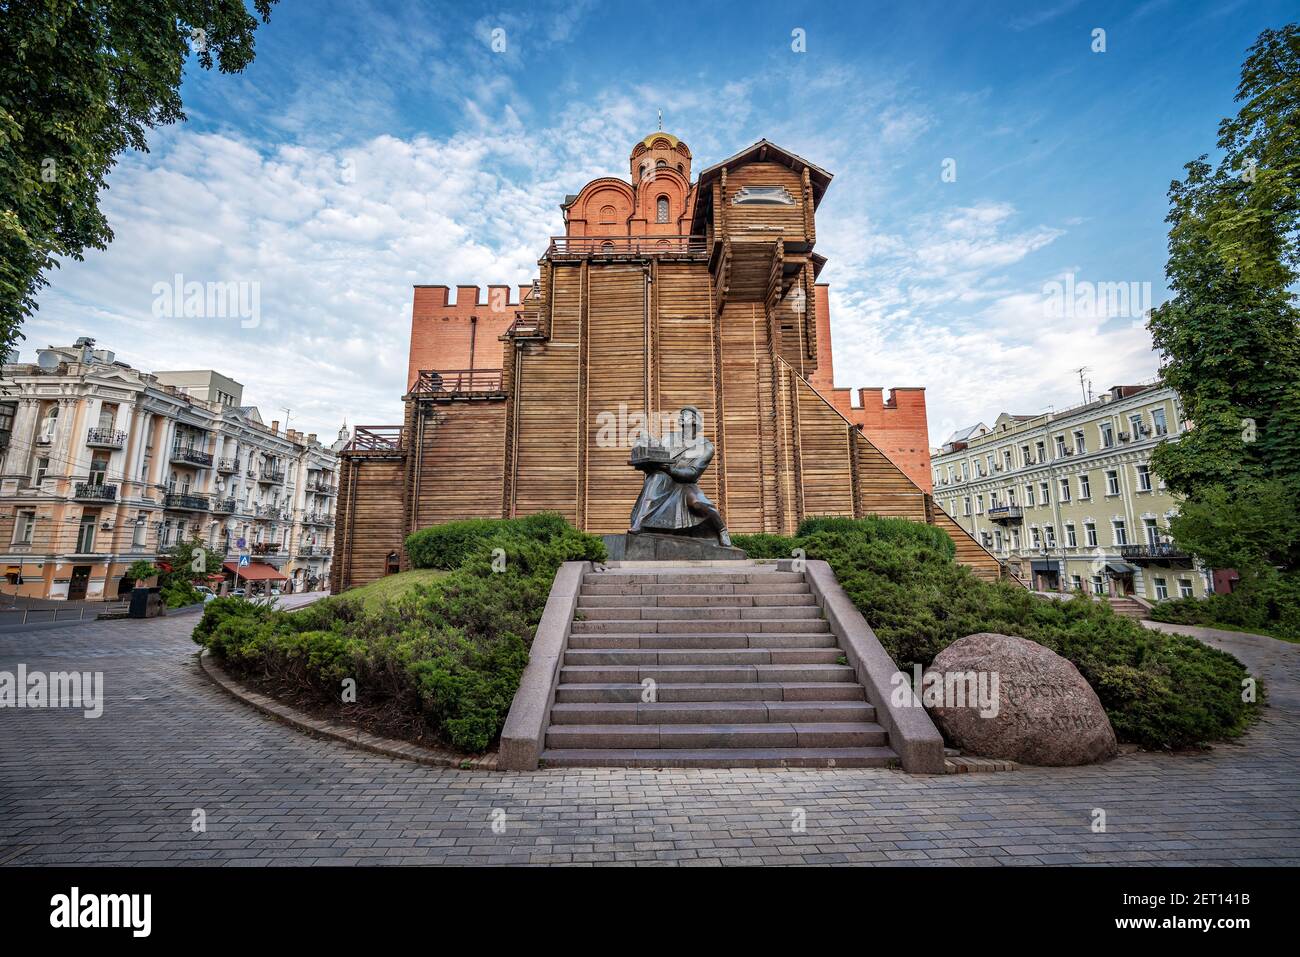 Golden Gate and Yaroslav the Wise statue - Kiev, Ukraine Stock Photo